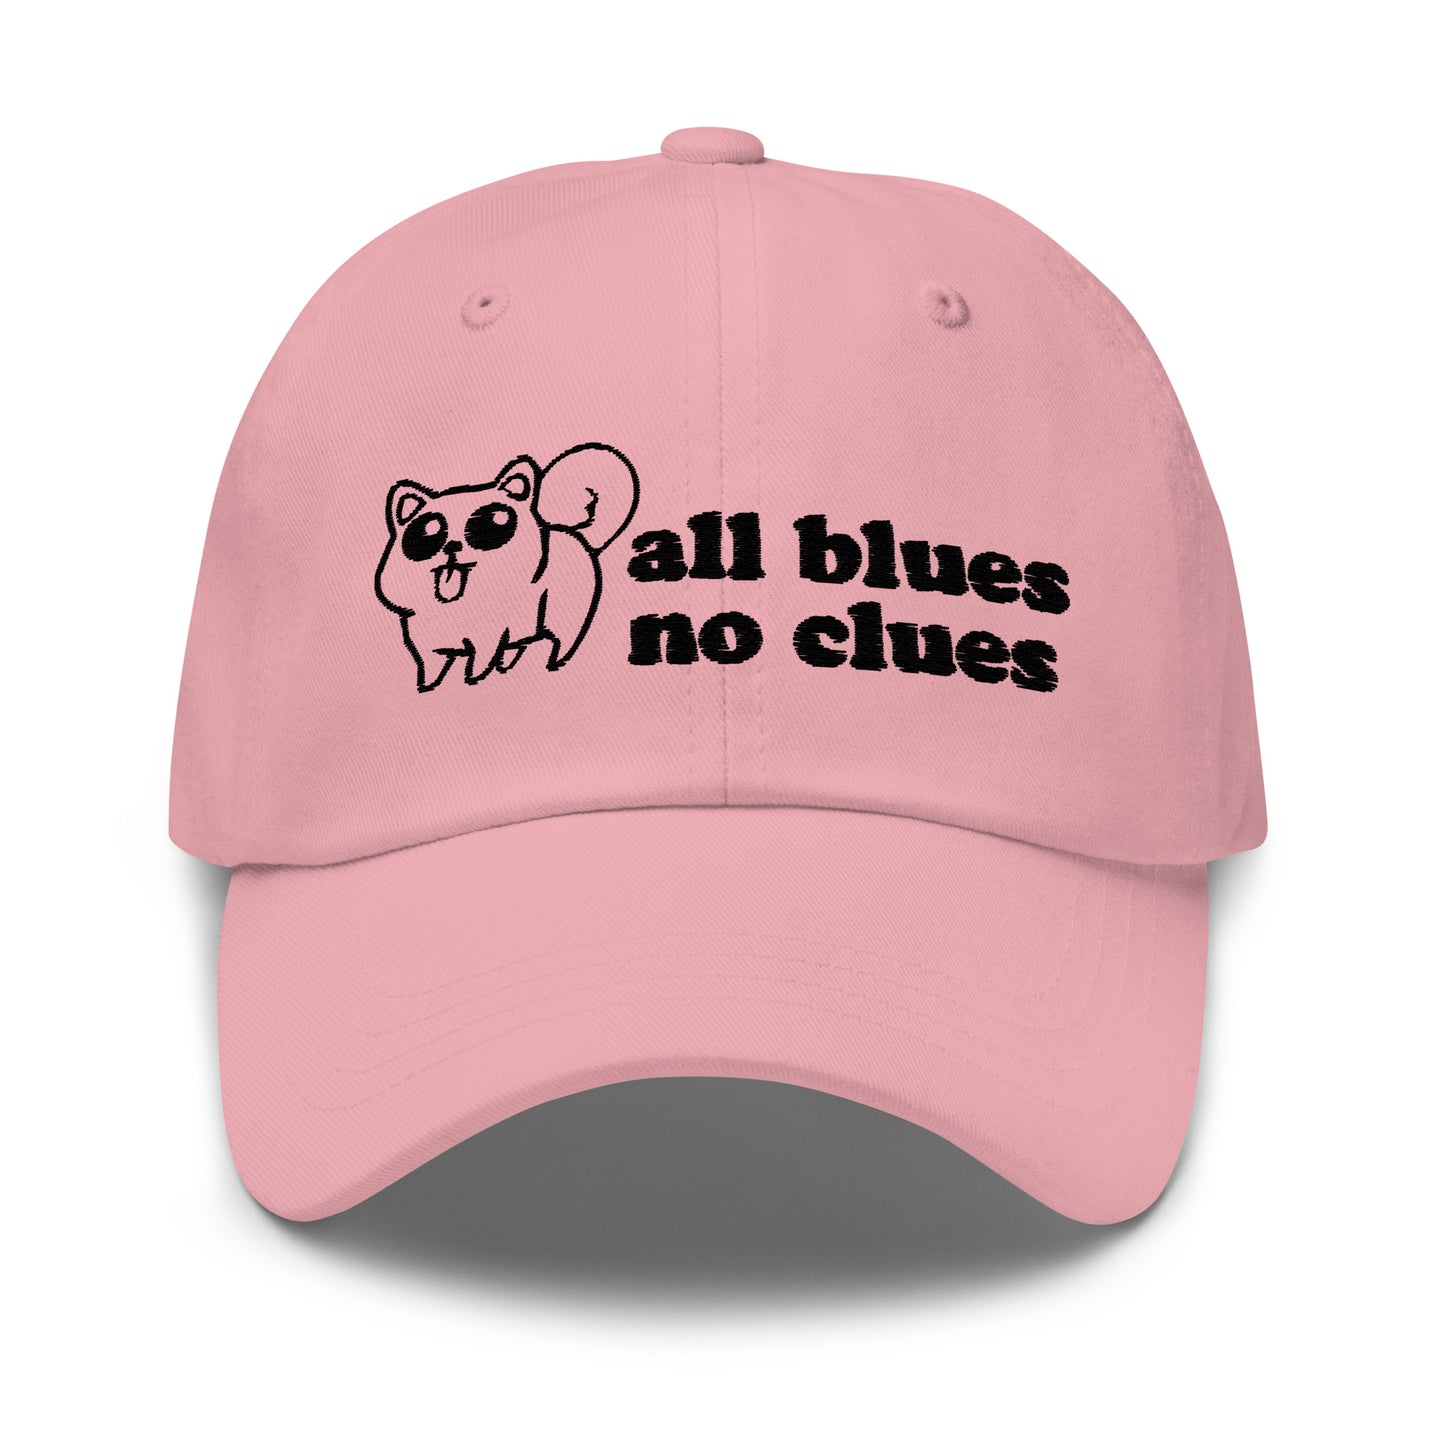 All Blues hat